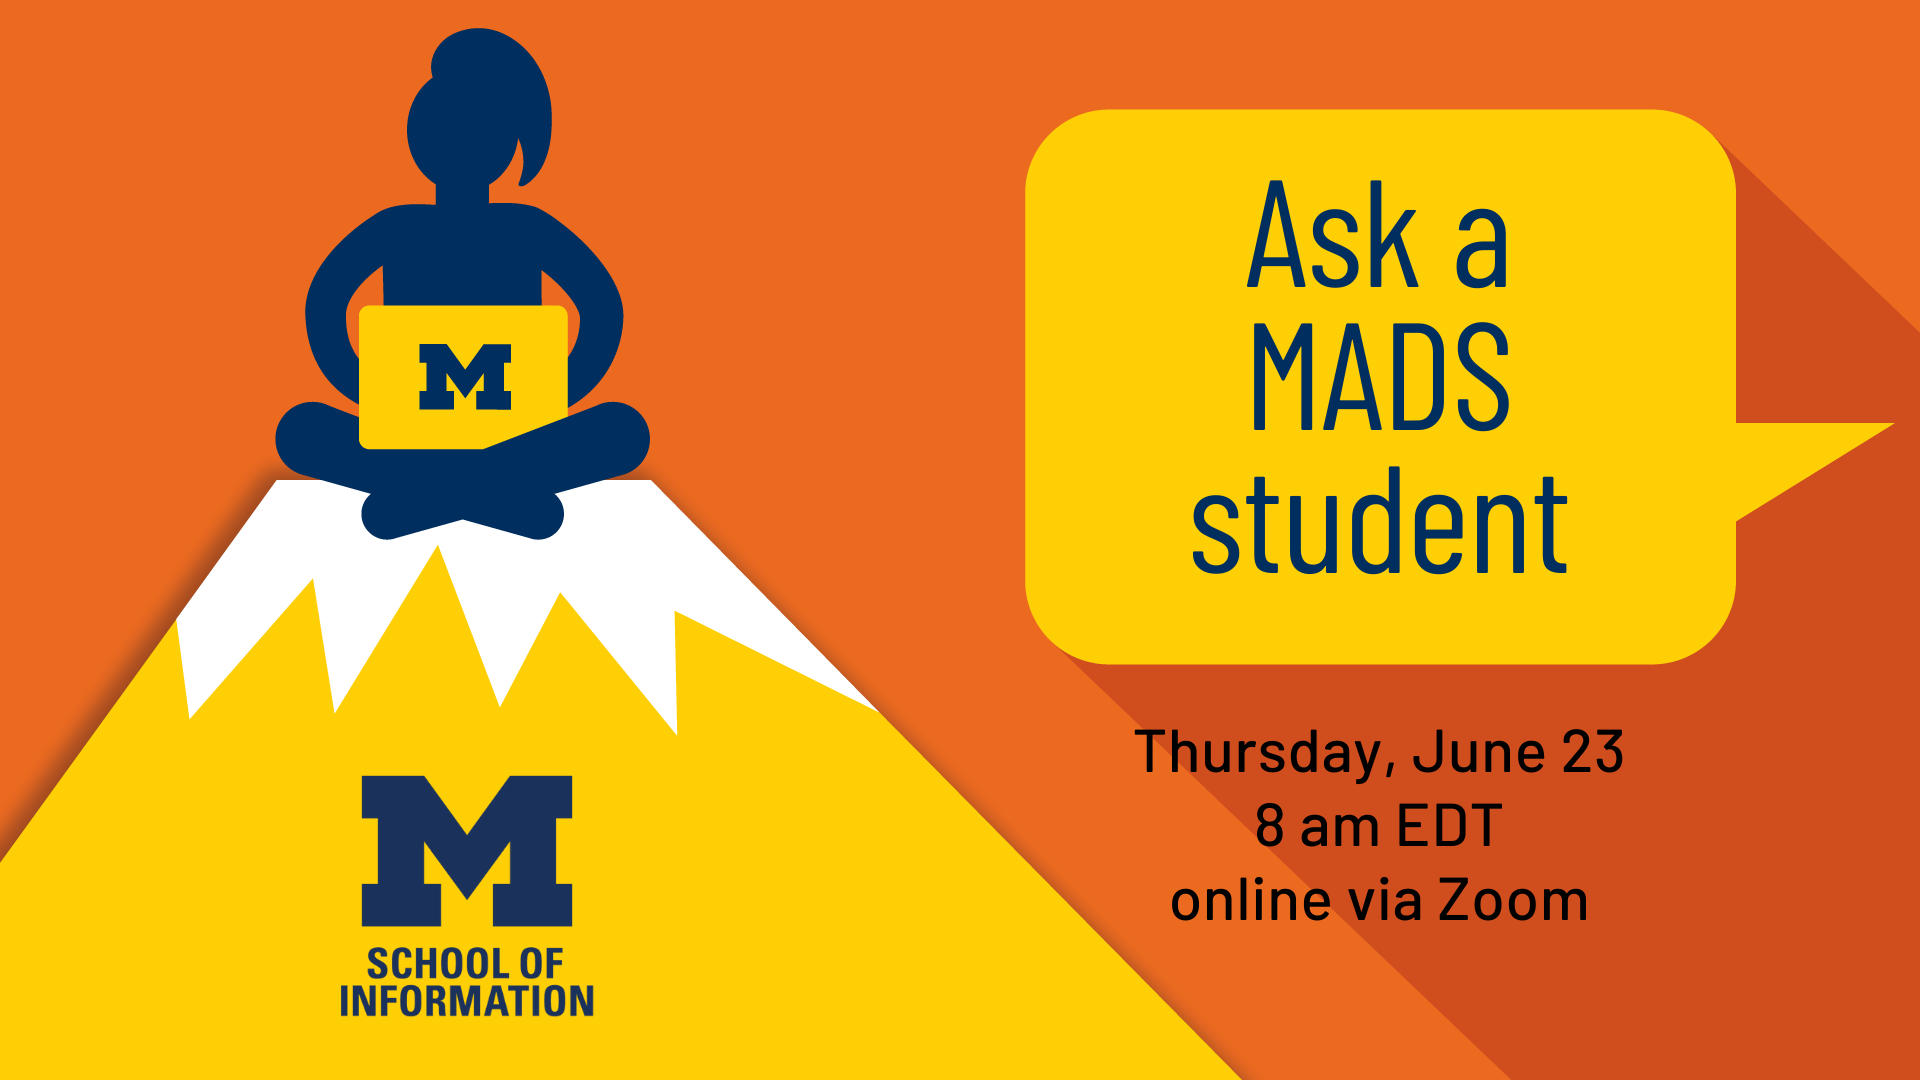 “Ask a MADS student. Thursday, June 23. 8 am EDT. Online via Zoom.”